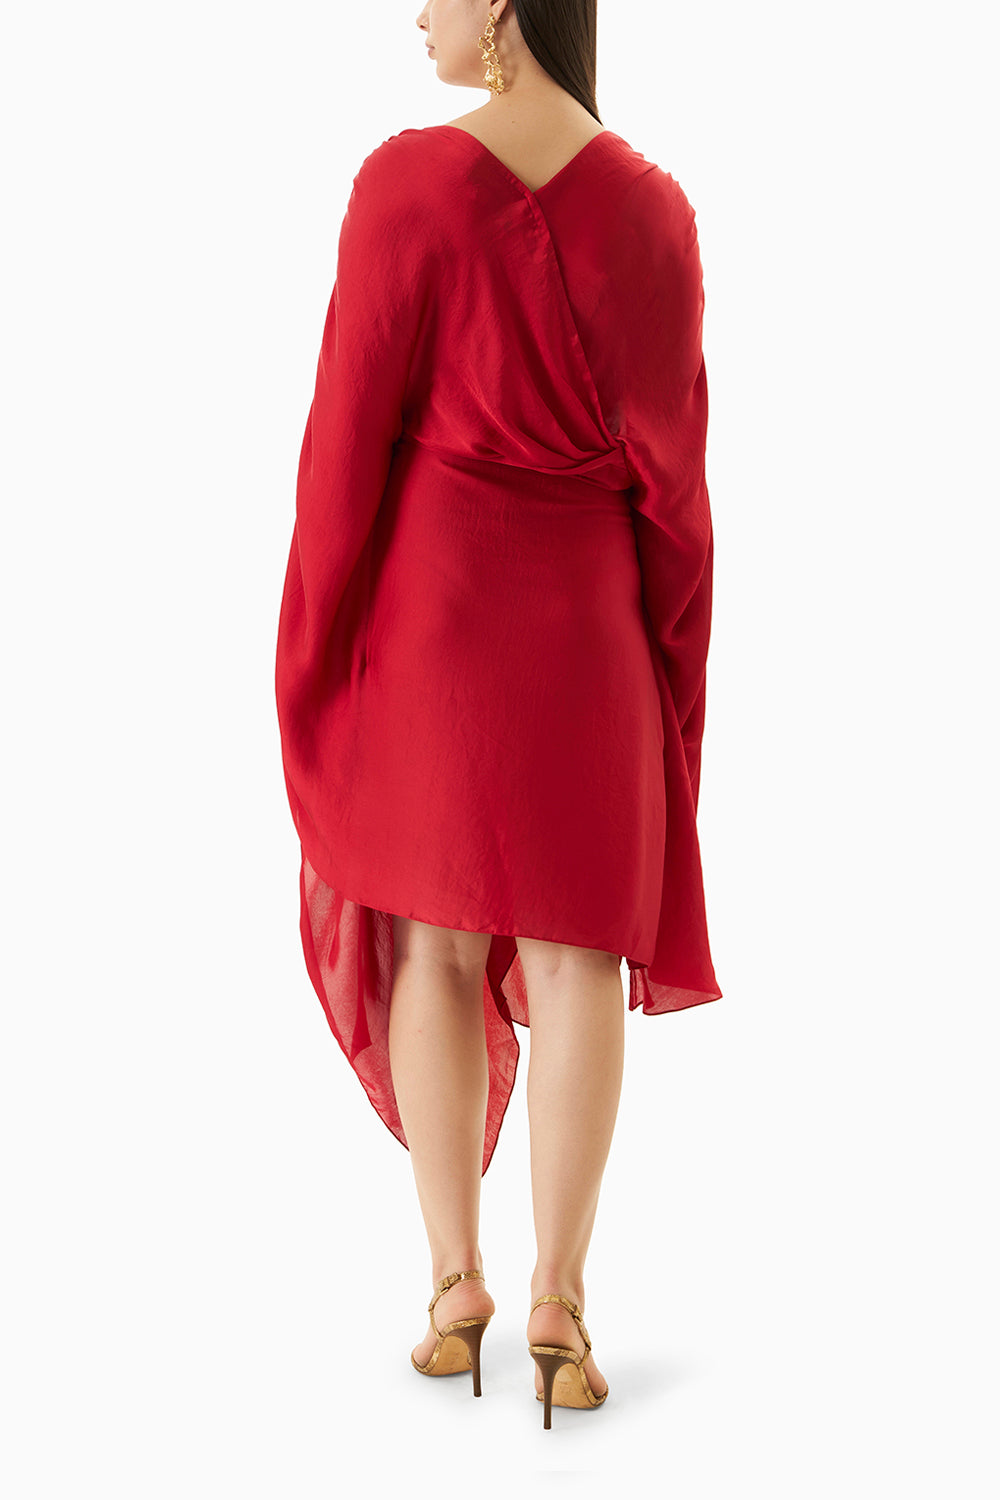 Red Peony Draped Dress